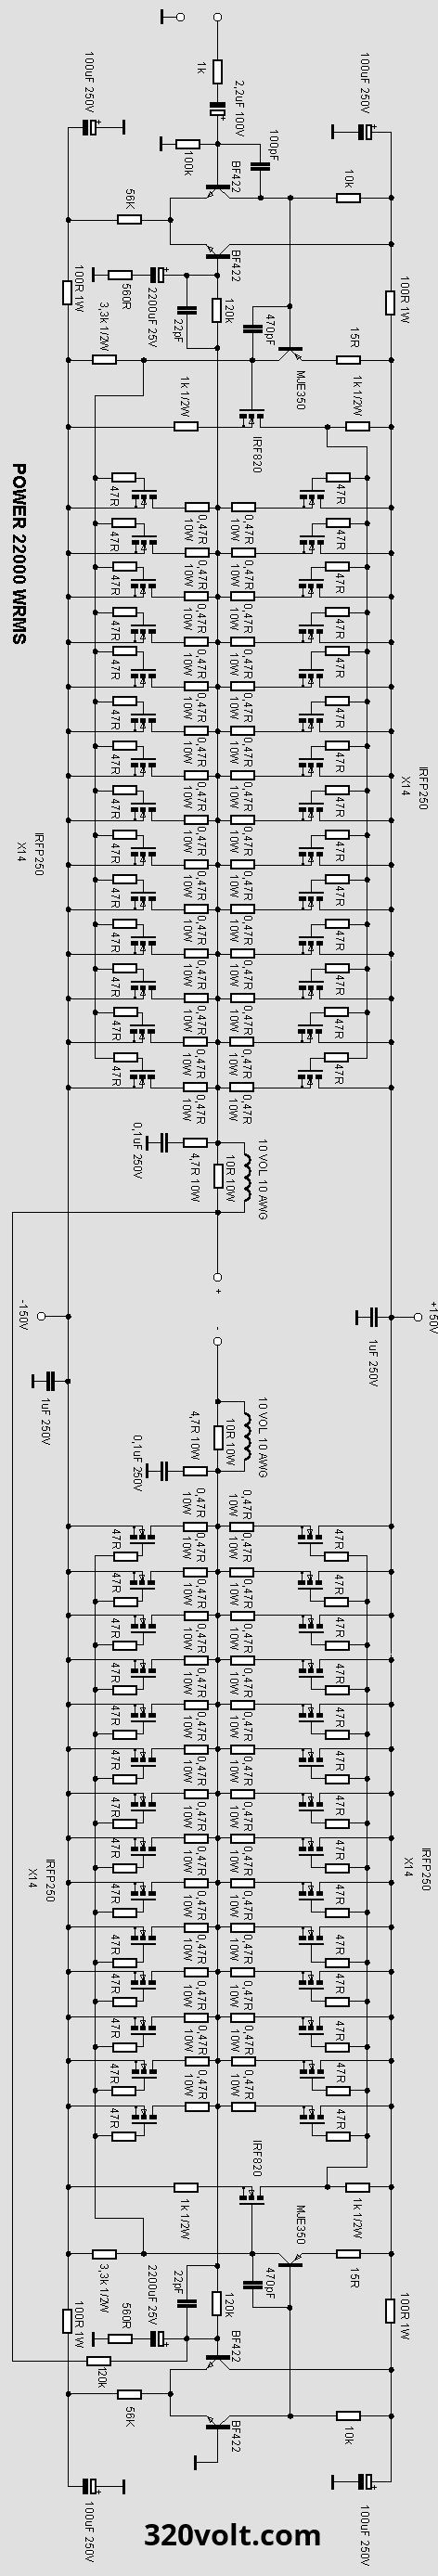 High Power 2200W Amplifier Circuit transistor amplifier audio amplifier circuits